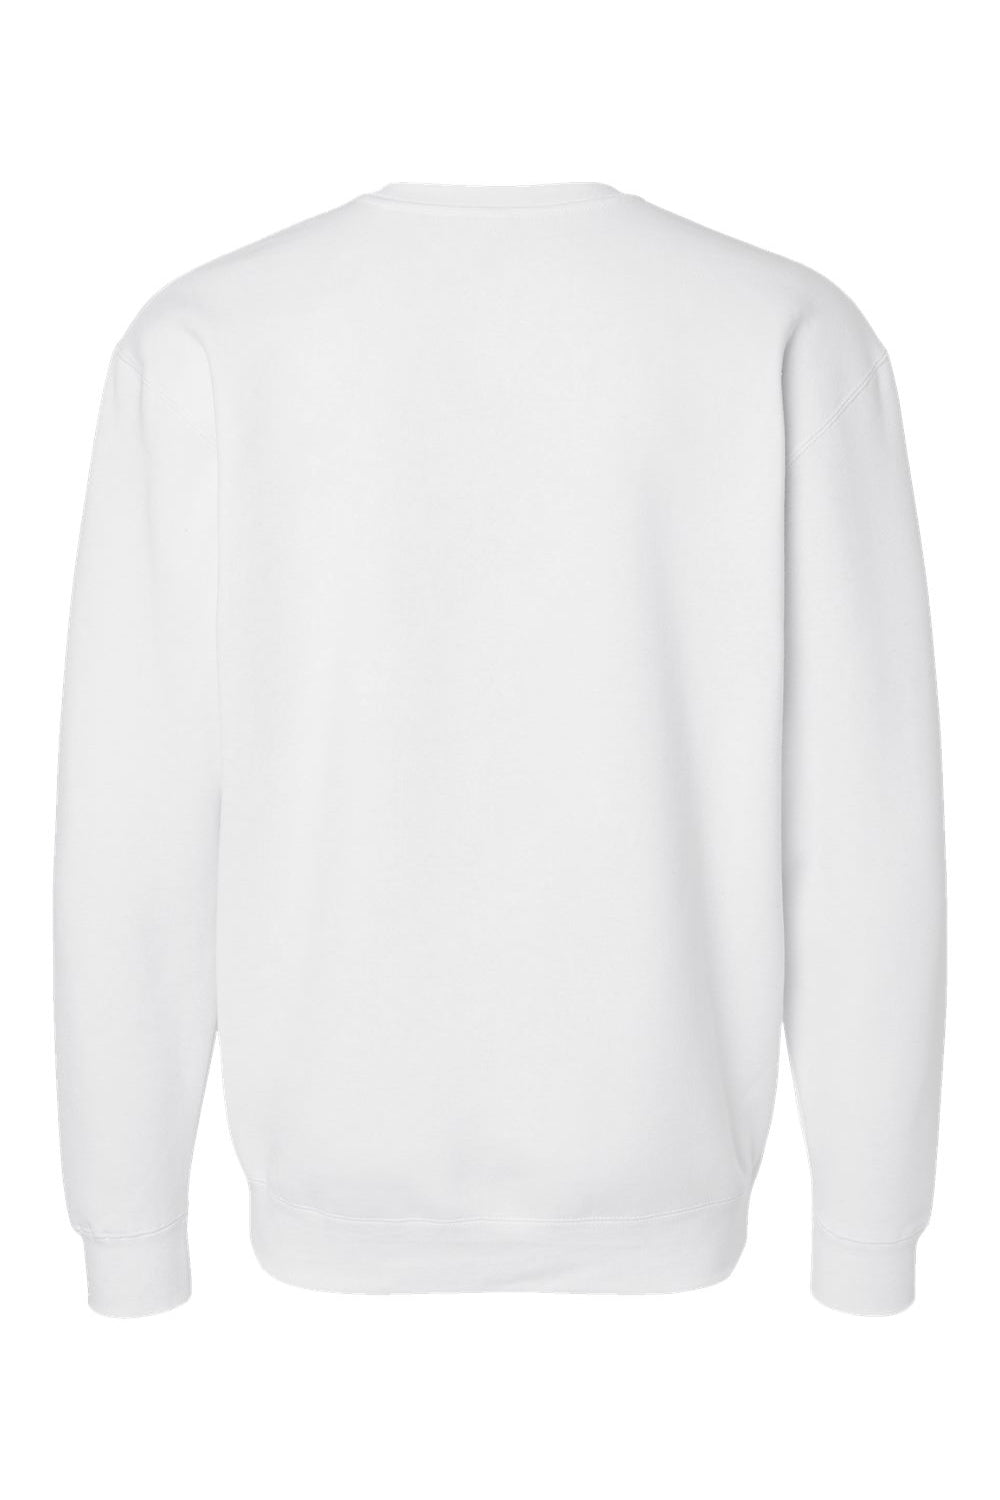 Independent Trading Co. IND3000 Mens Crewneck Sweatshirt White Flat Back